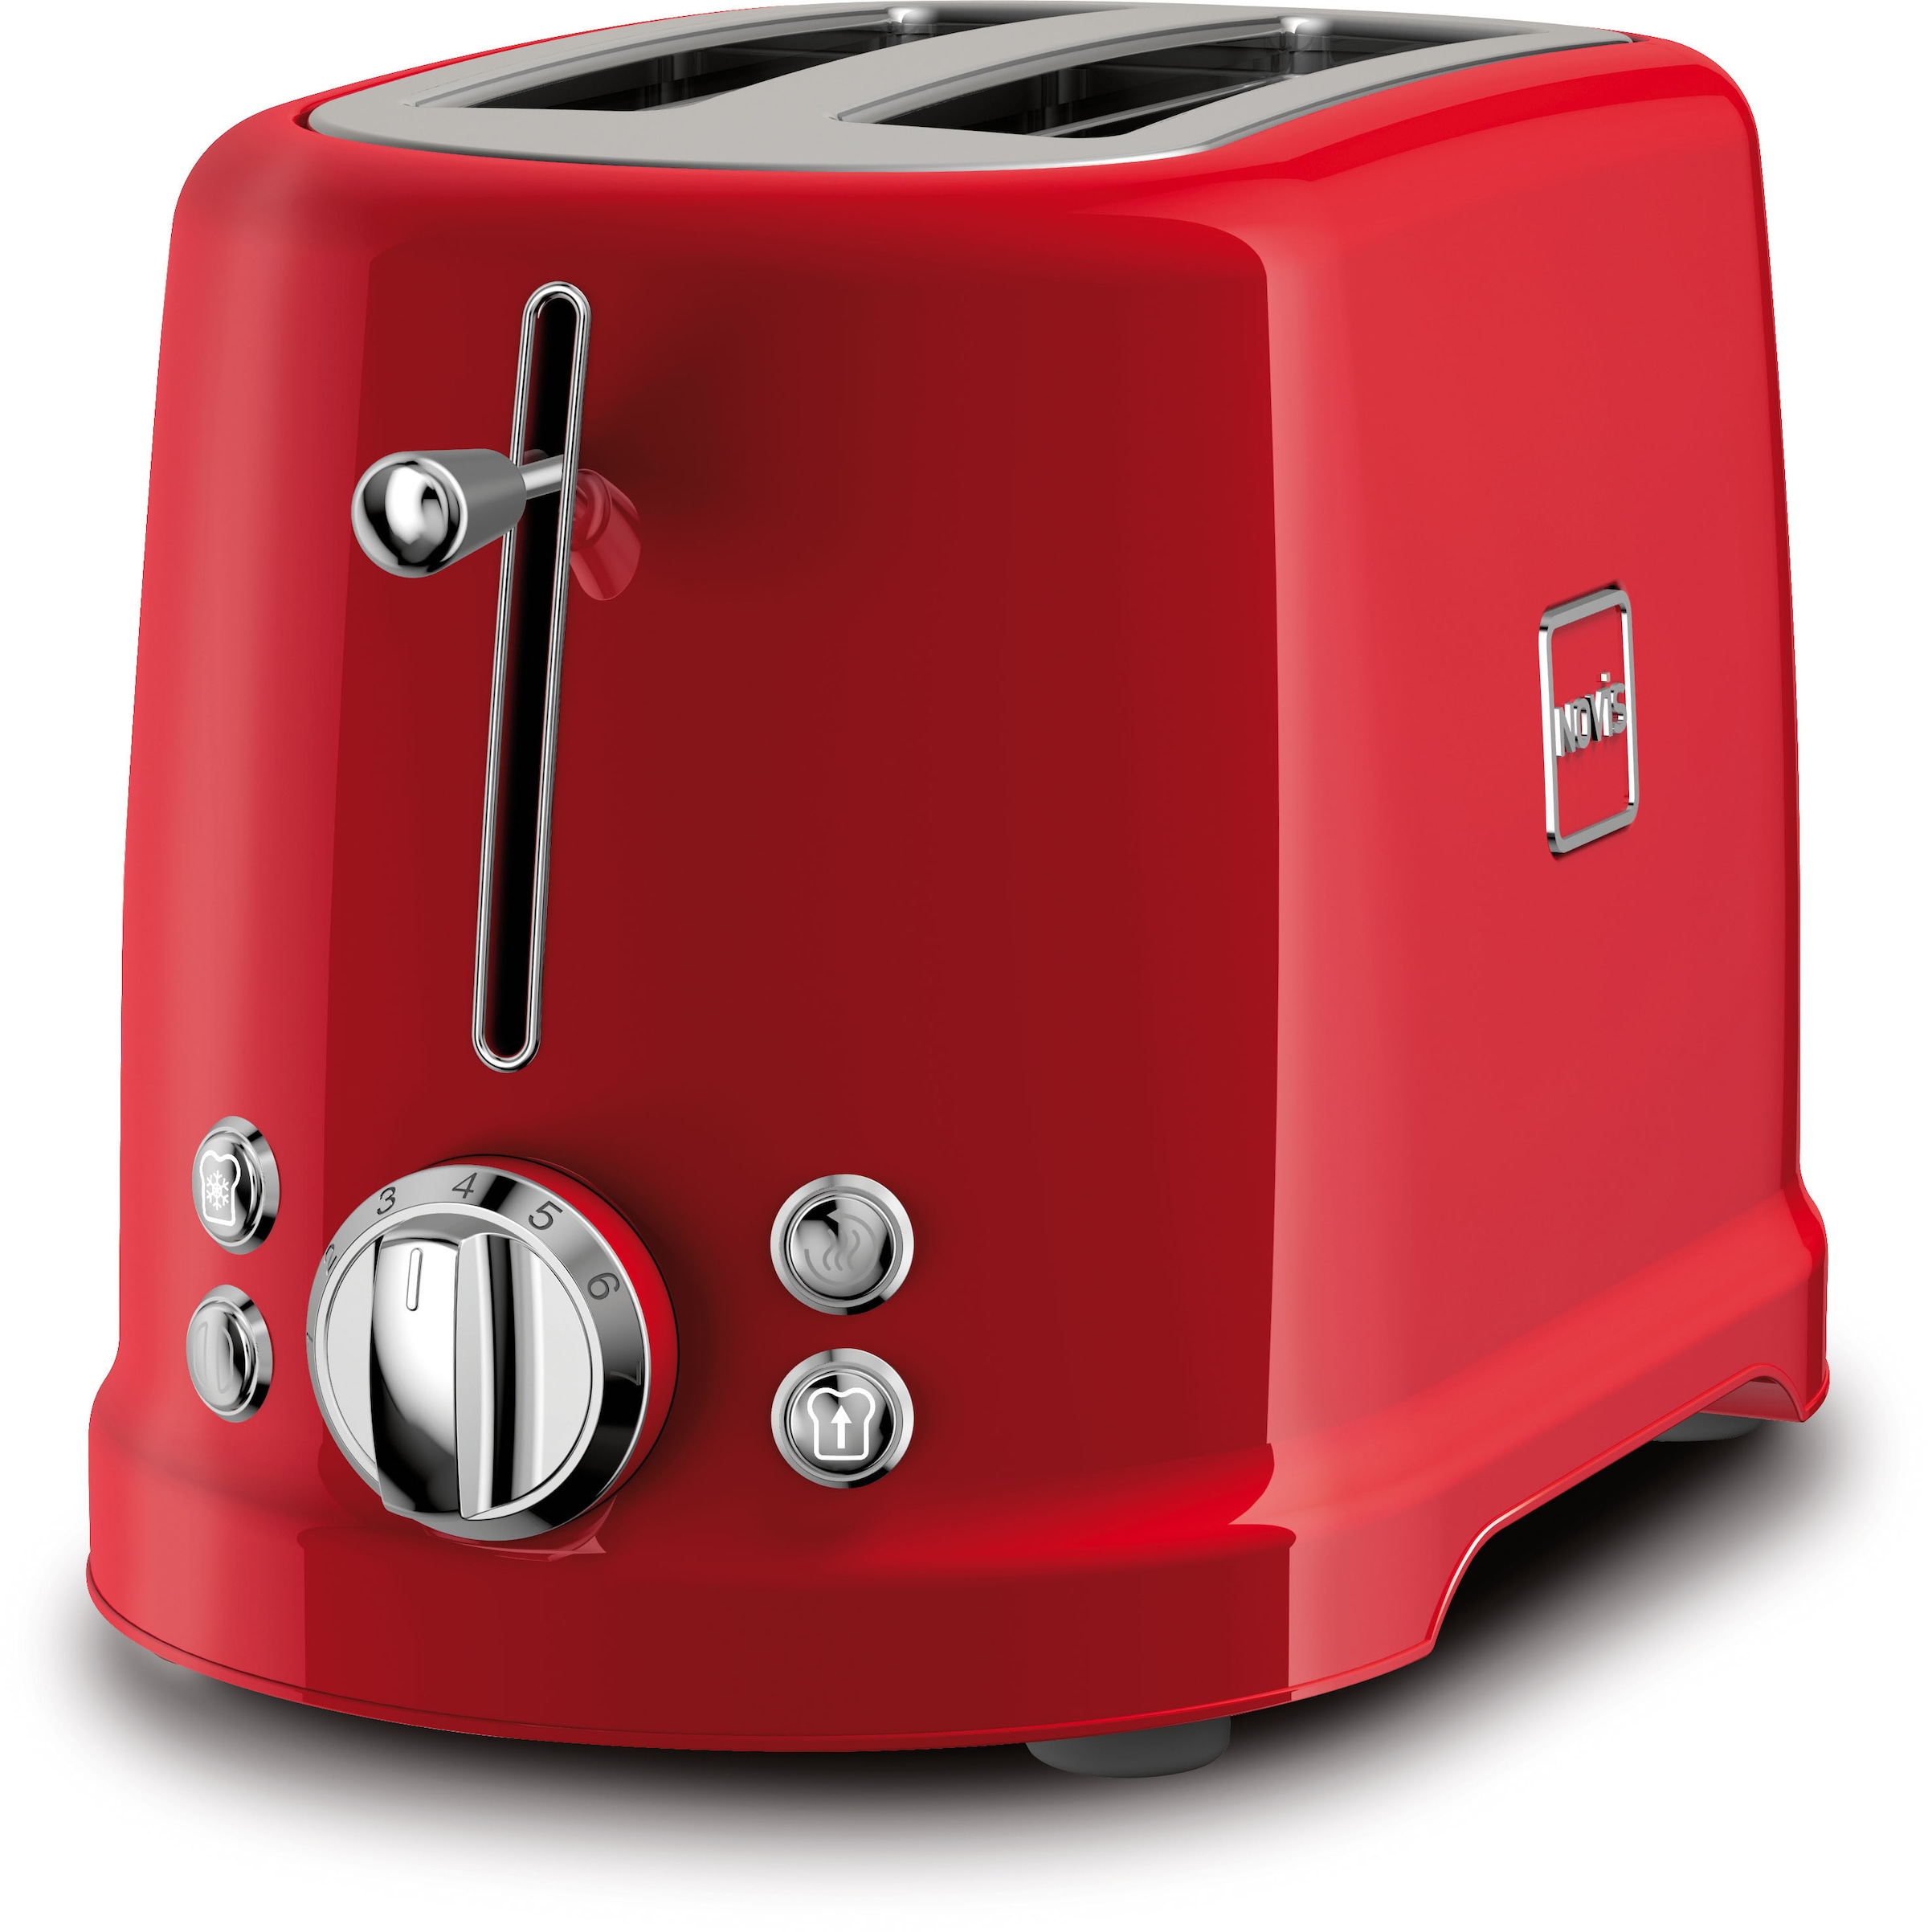 NOVIS Toaster »T2 rot«, 2 kurze Schlitze, 900 W